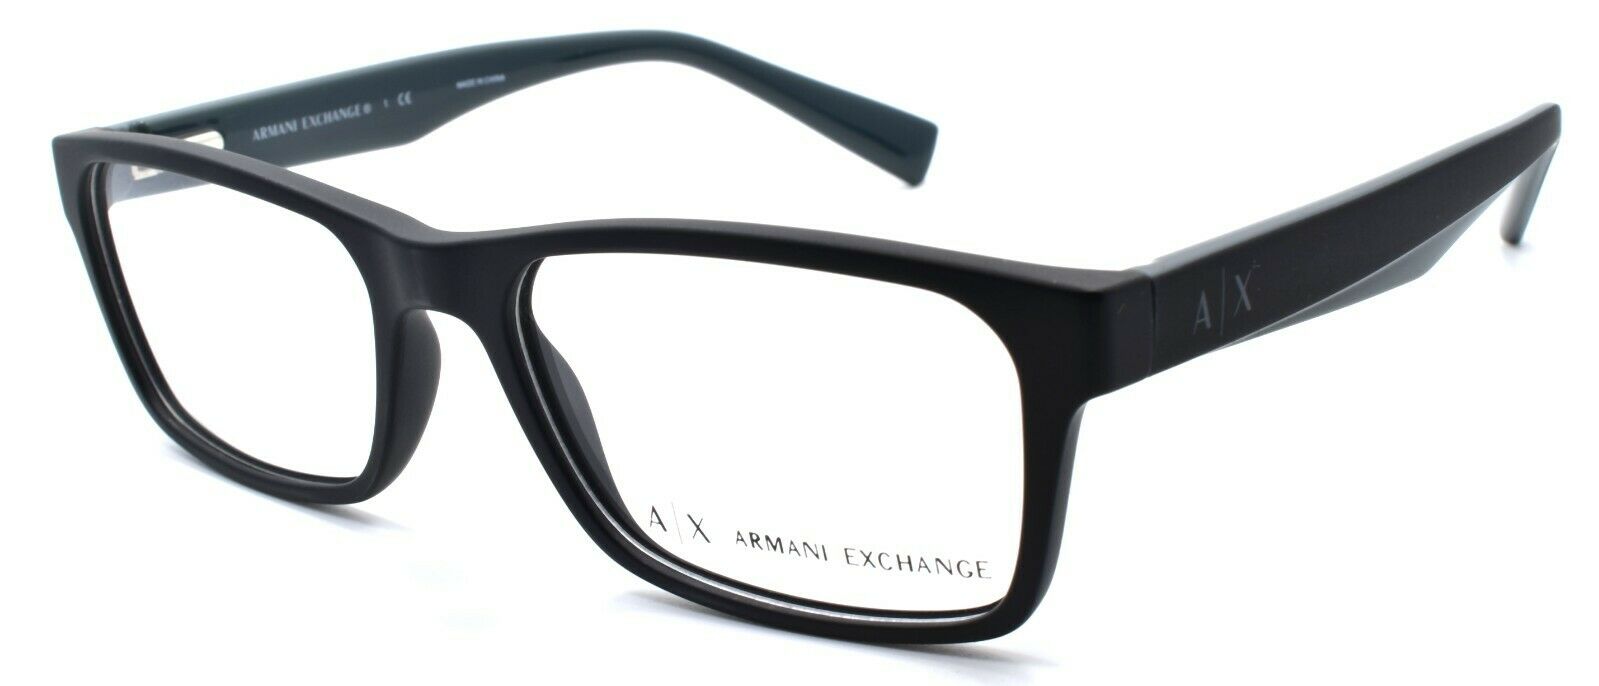 1-Armani Exchange AX3038 8199 Men's Eyeglasses Frames 54-17-140 Matte Black-8053672627091-IKSpecs